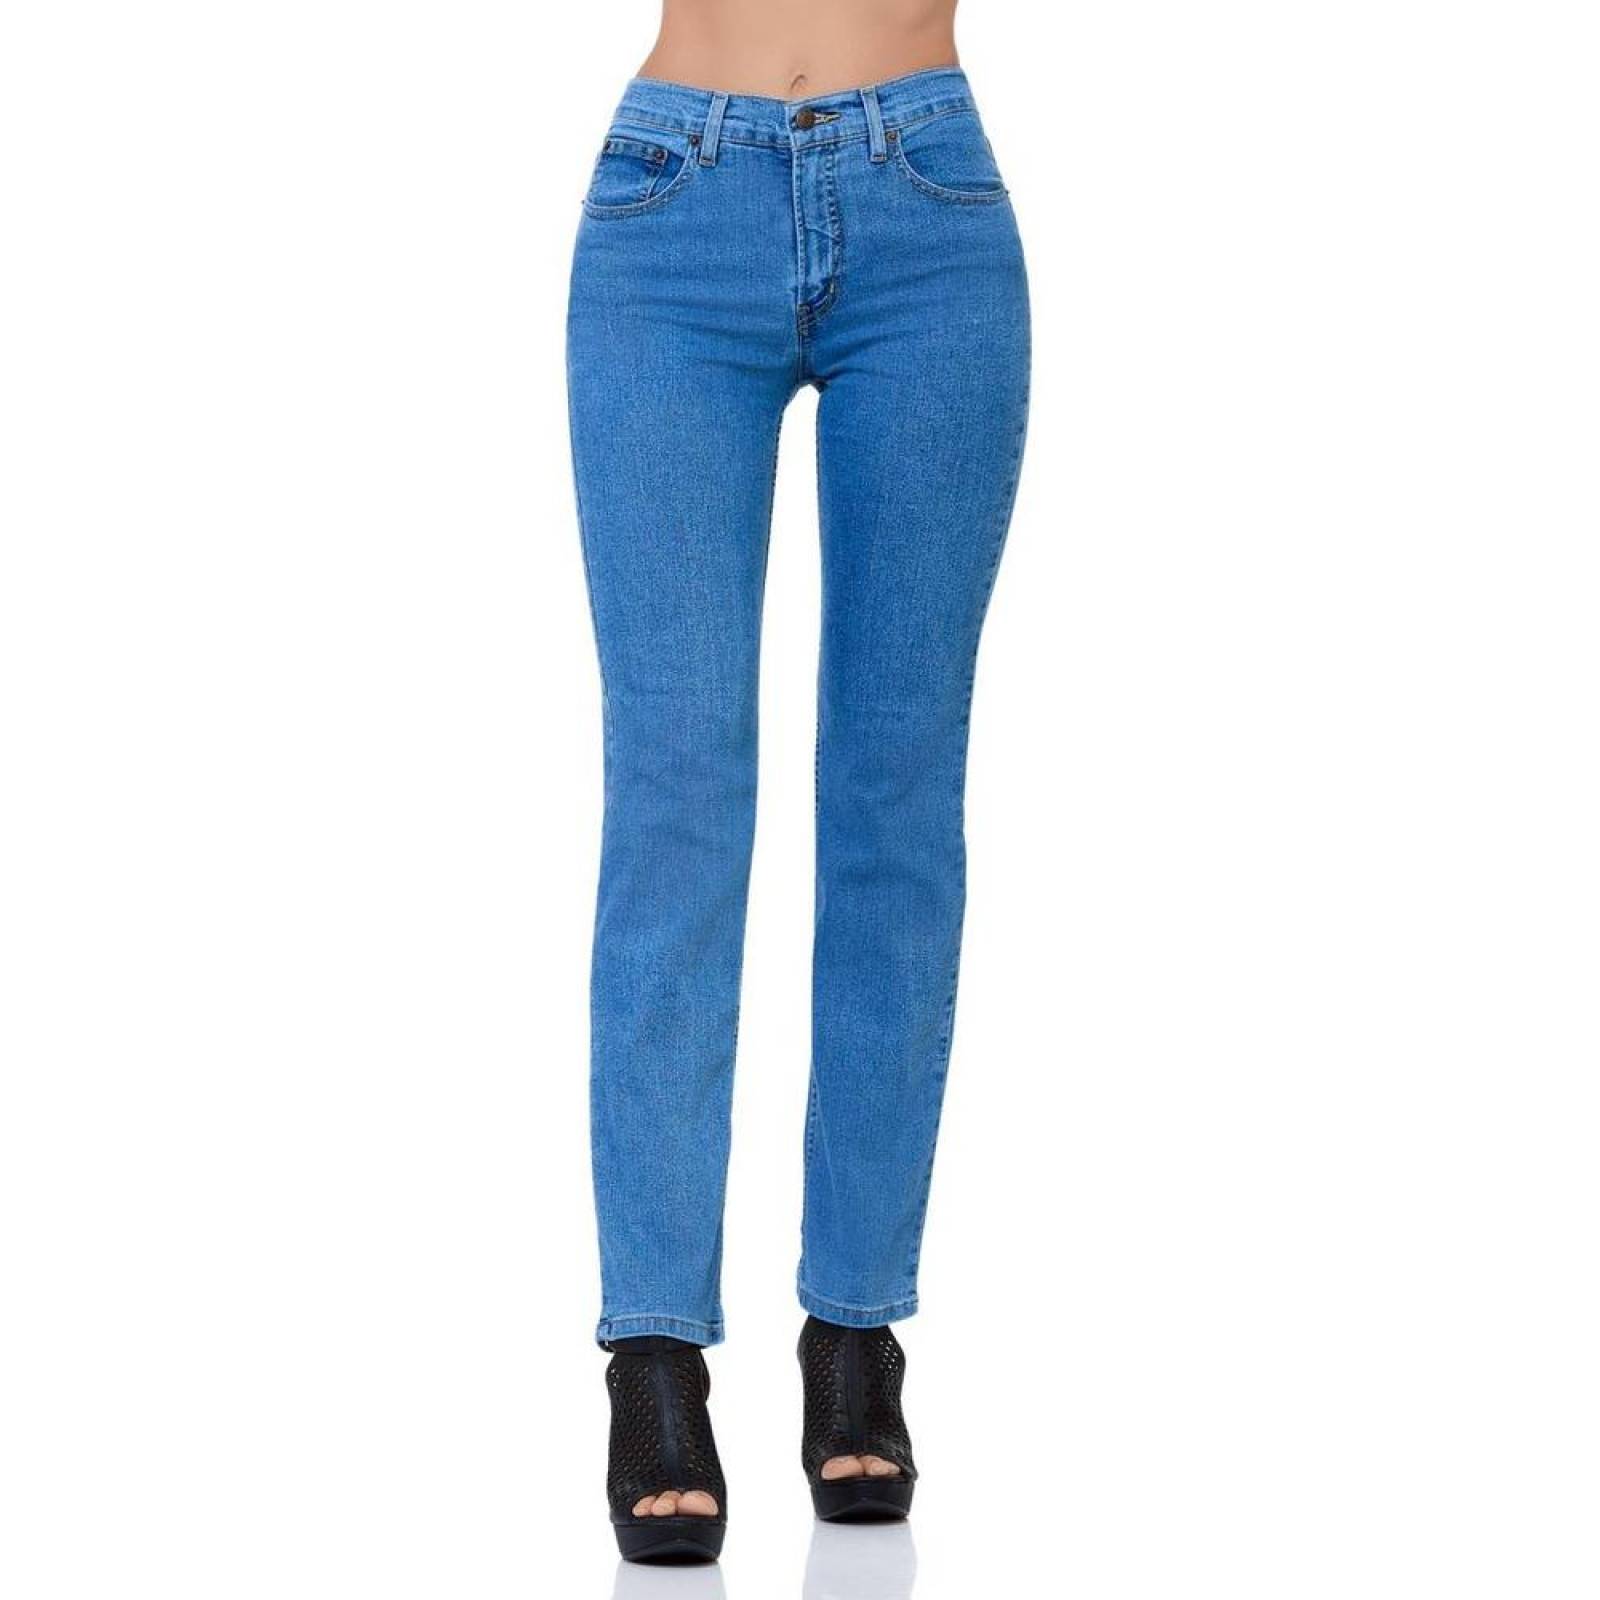 Jeans Oggi Jeans Mujer Azul Mezclilla Stretch Atraction 